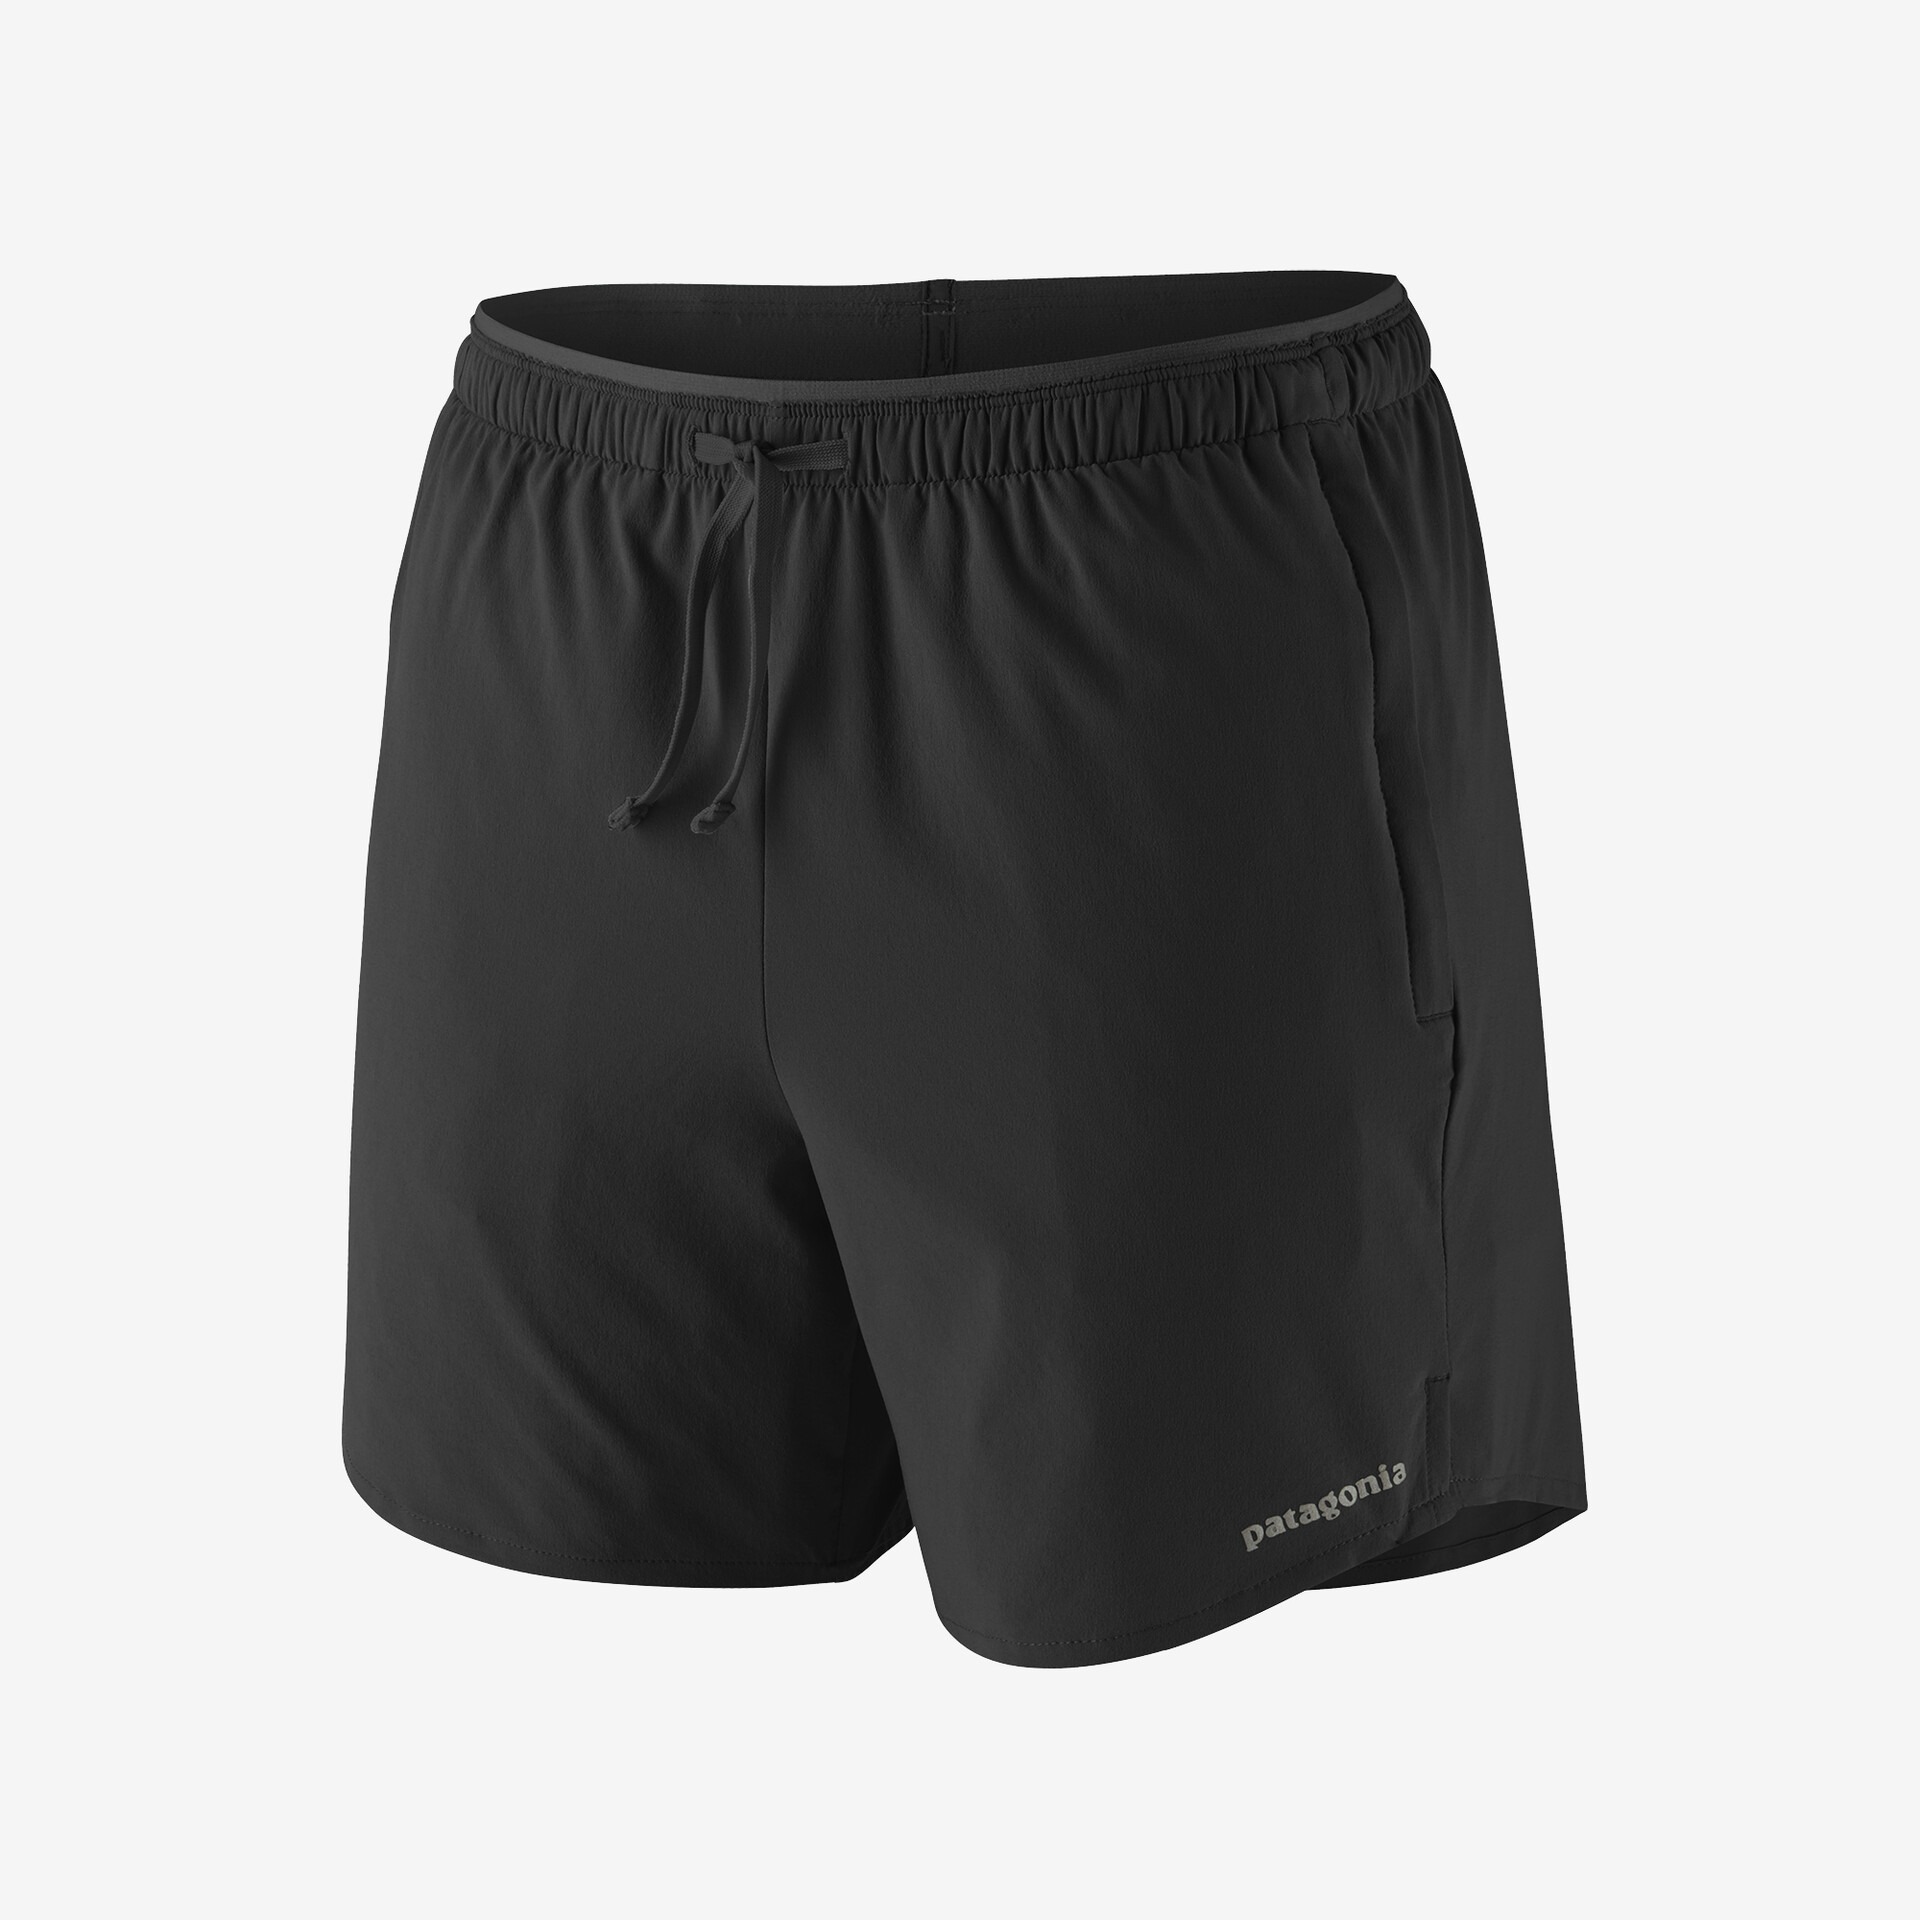 Patagonia Multi Trails Shorts 5 1/2 in. 女款5.5吋短褲